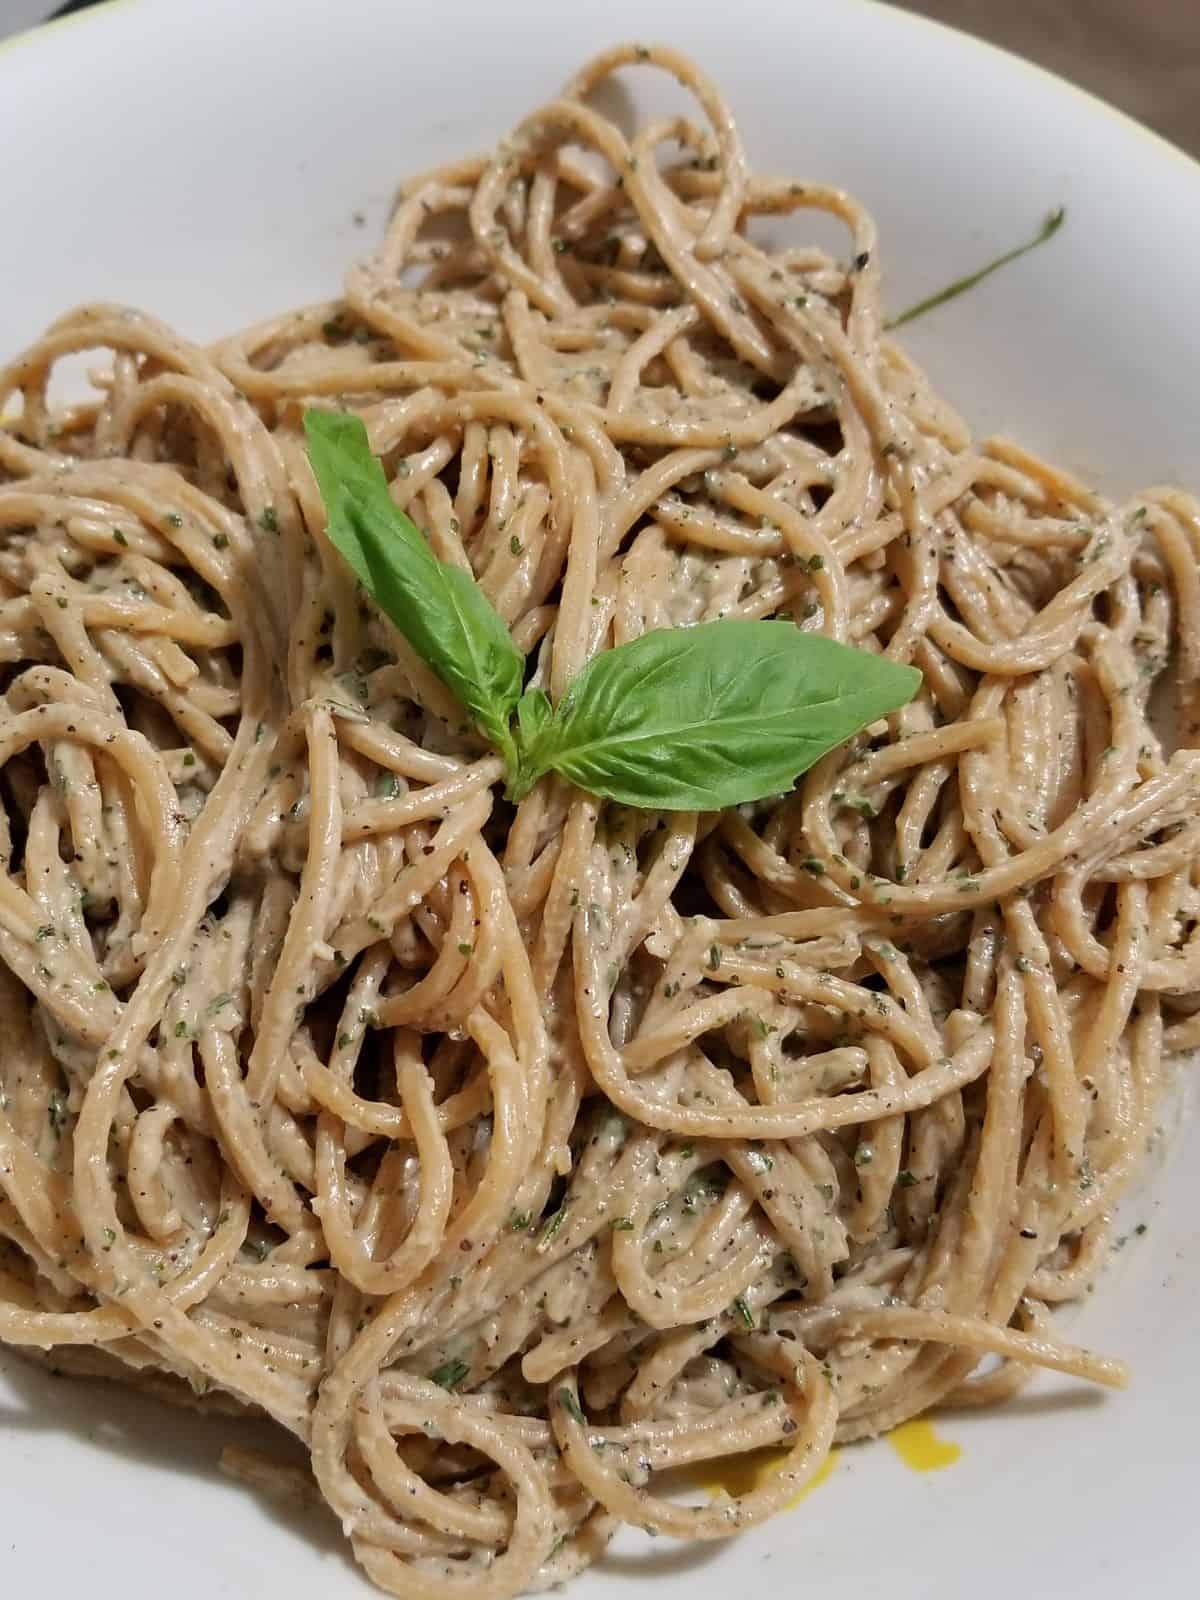 a plate of spaghetti pasta coated with garlic herb tahini sauce.